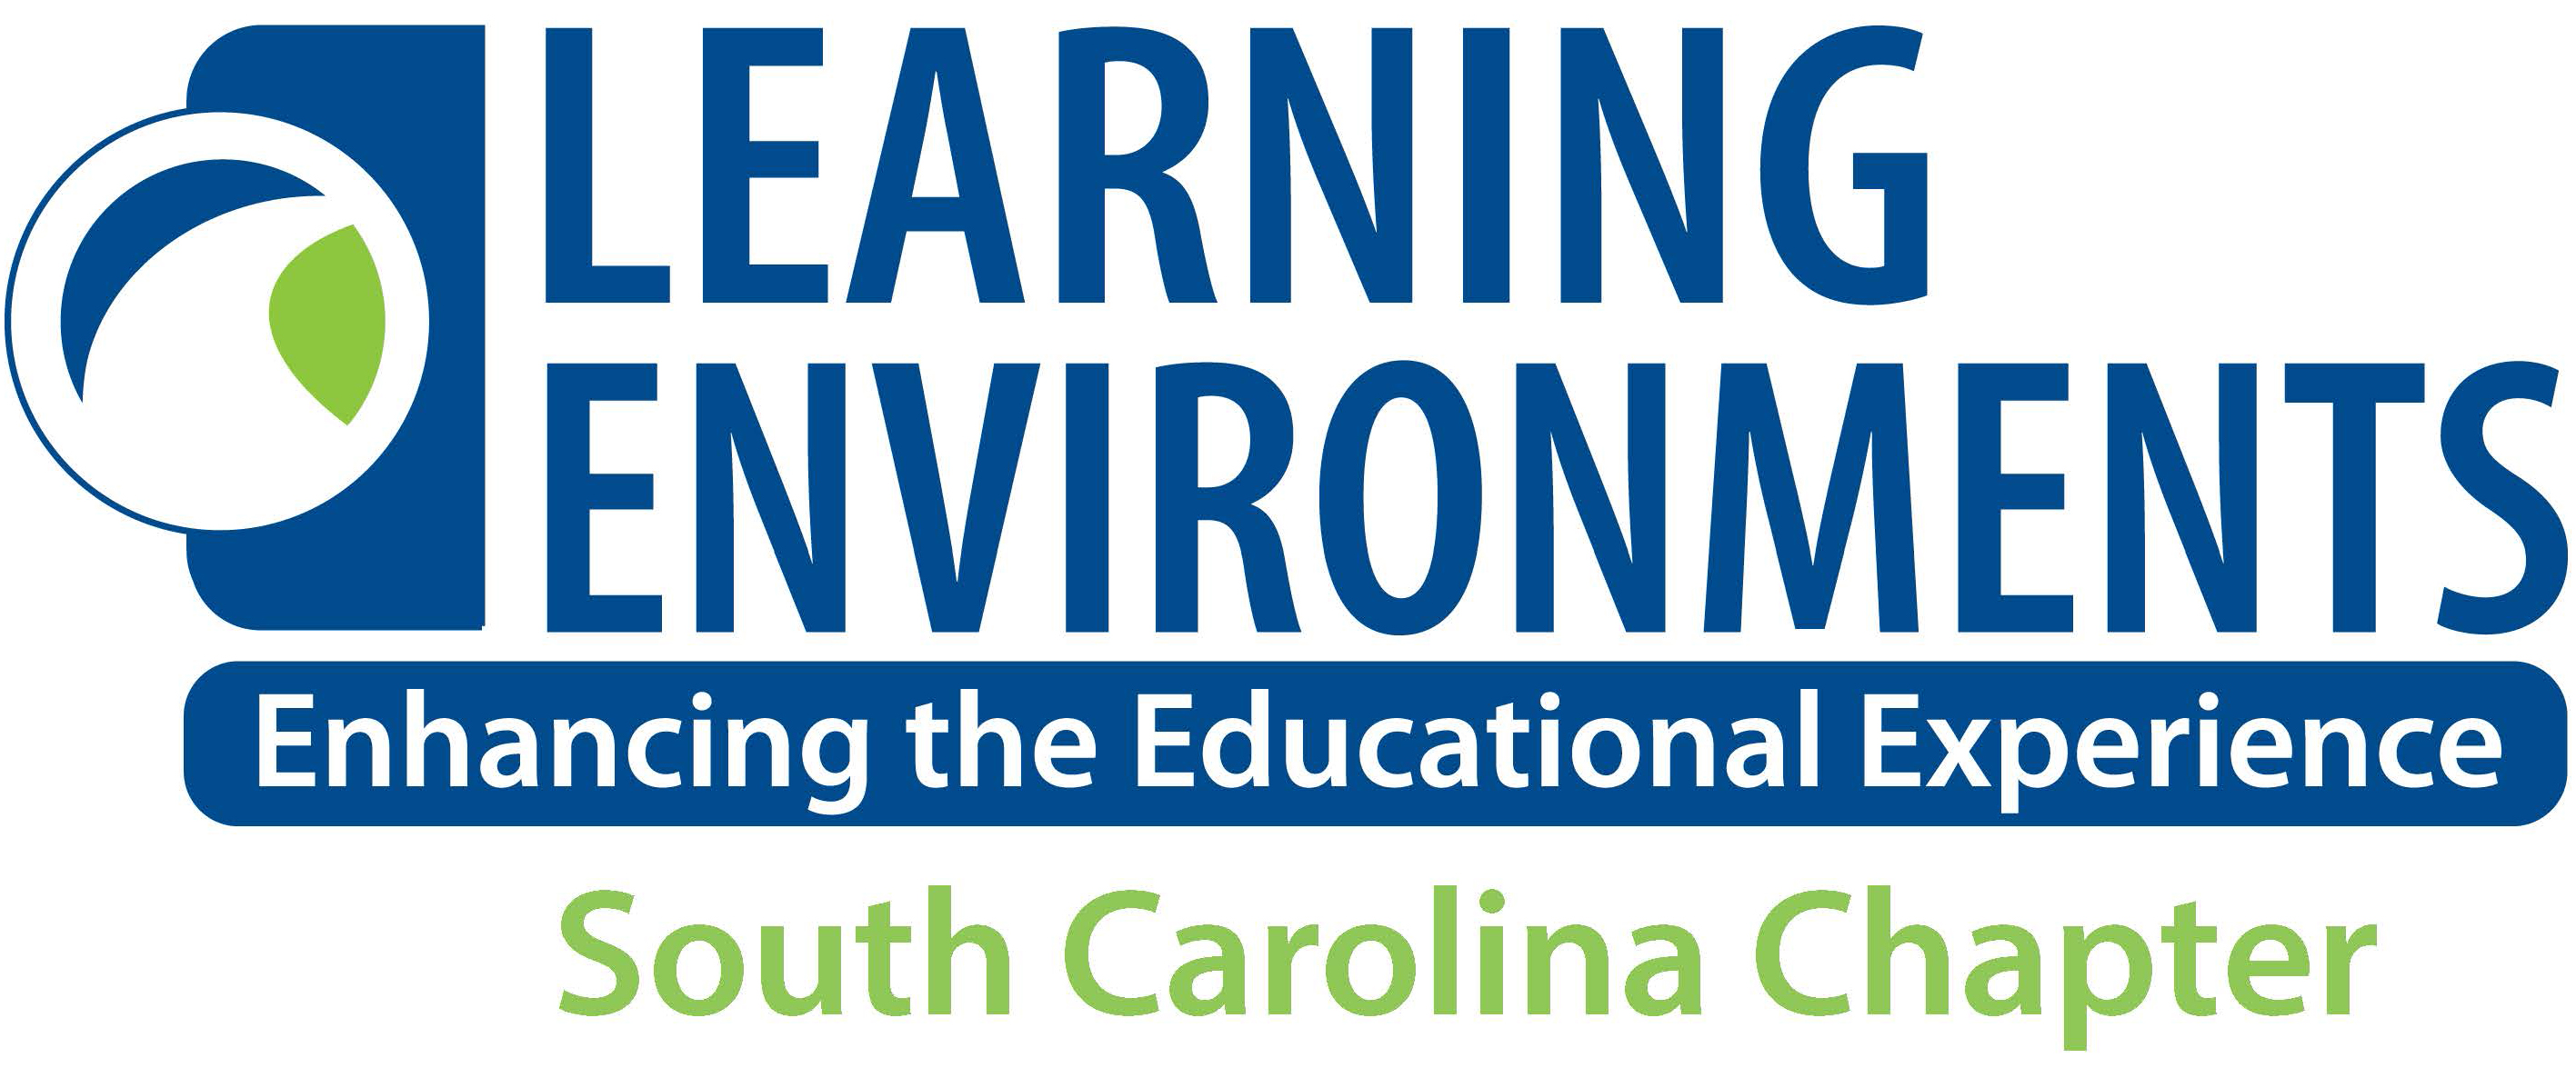 South Carolina Chapter Conference